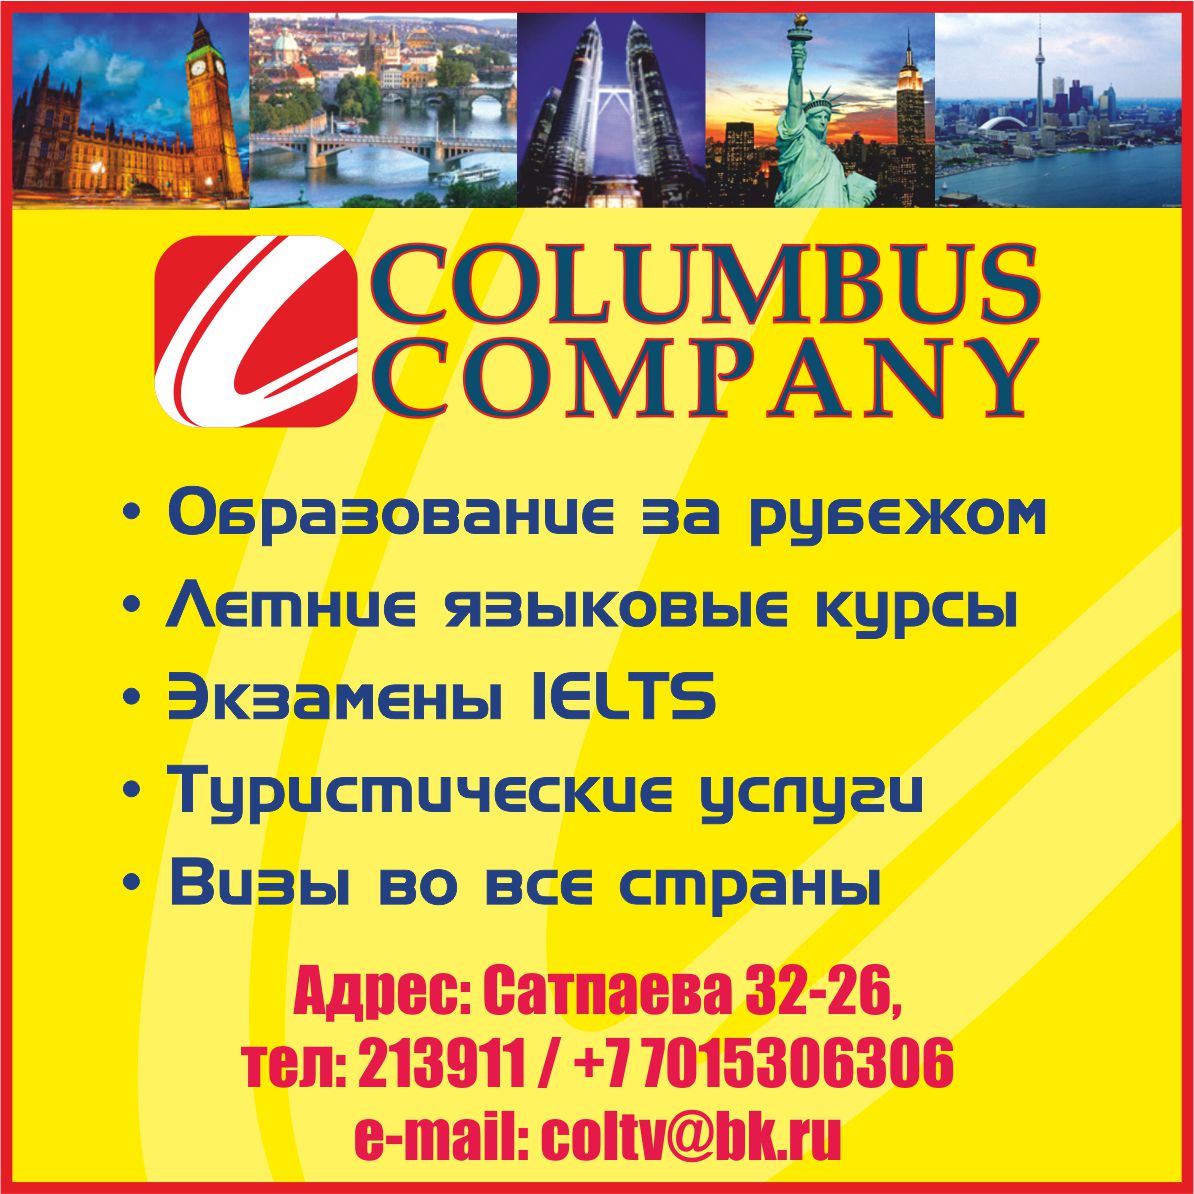 COLUMBUS COMPANY